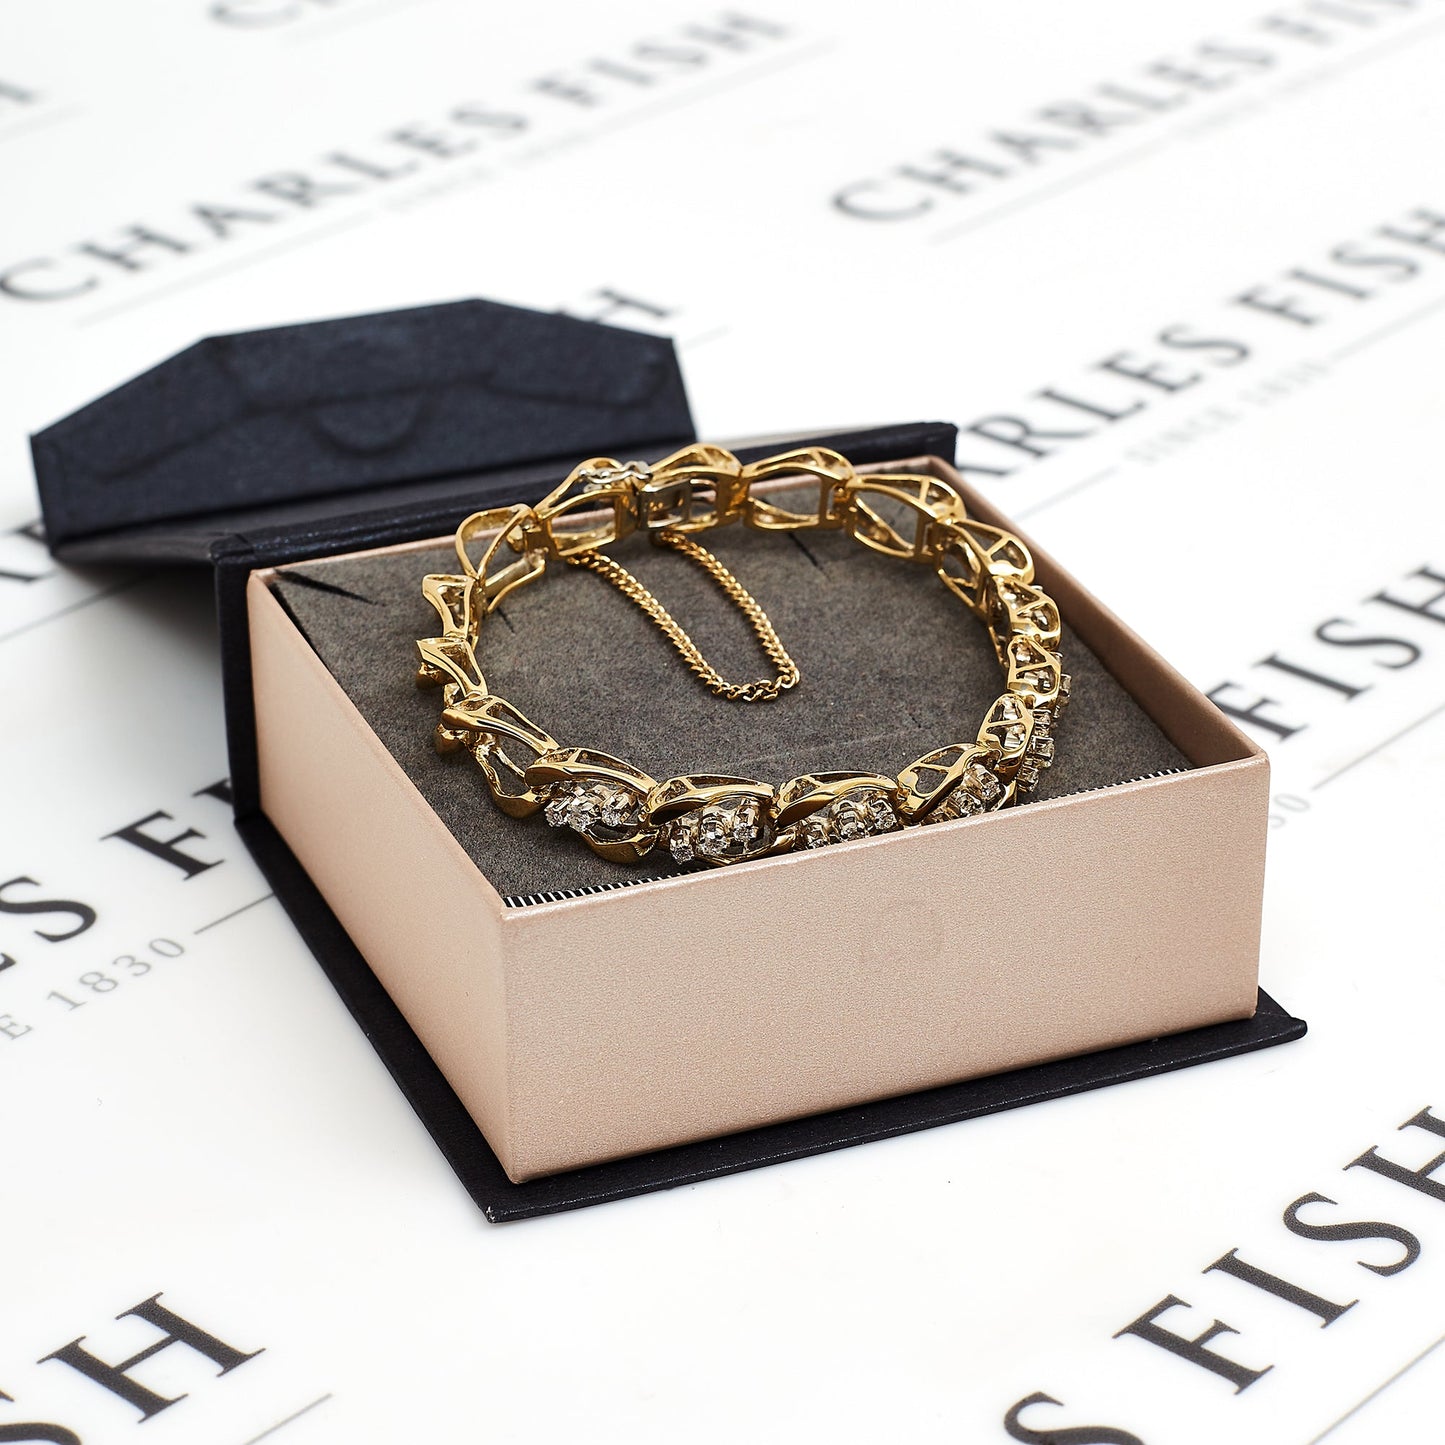 Pre-Owned 18ct Gold Diamond Set Curb Link Bracelet